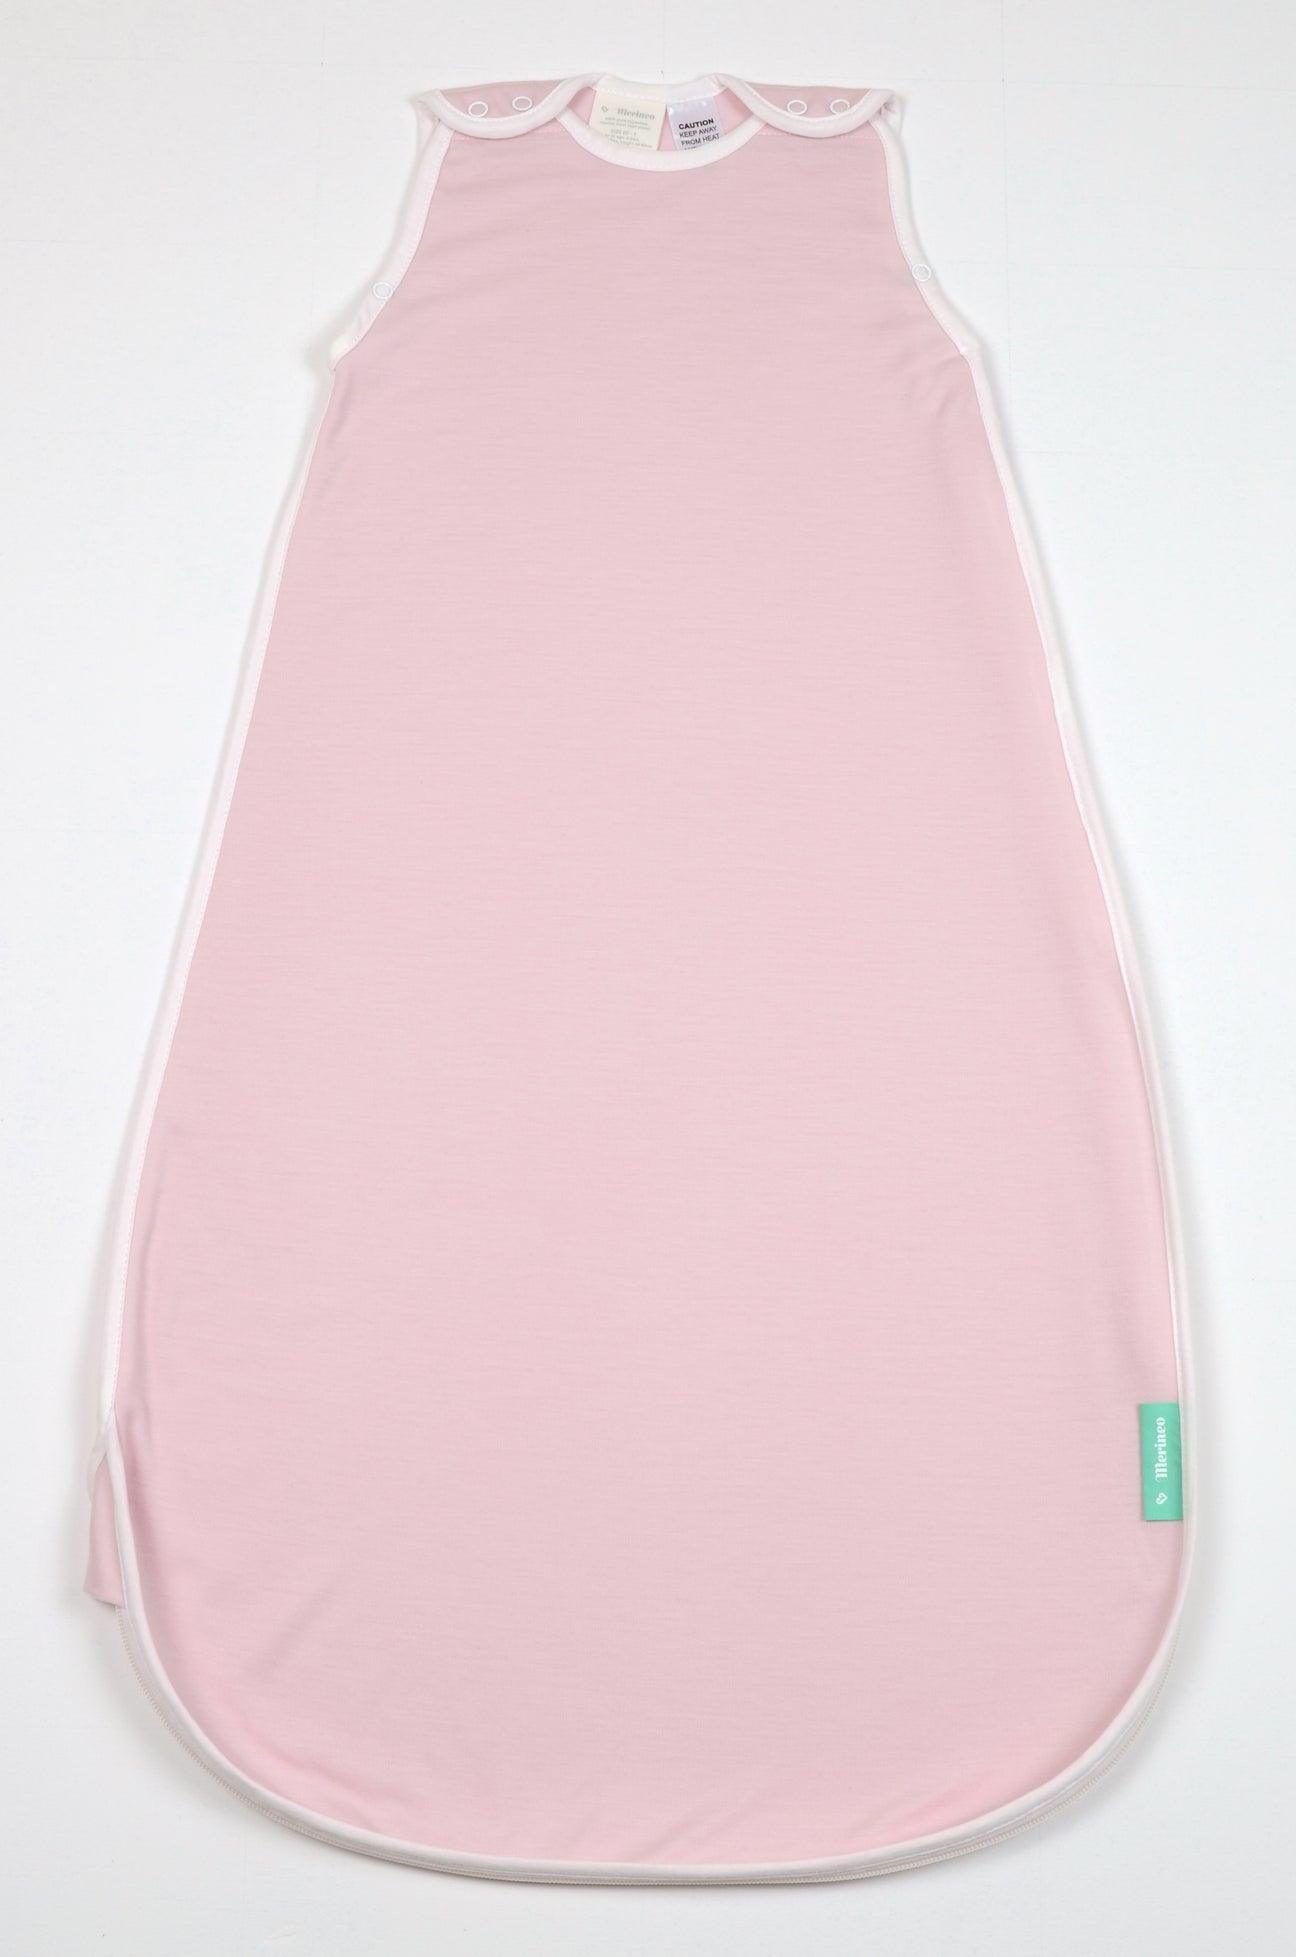 Merino Toddler Sleeping Bag - Pink Blossom - baby sleeping bag - Merineo